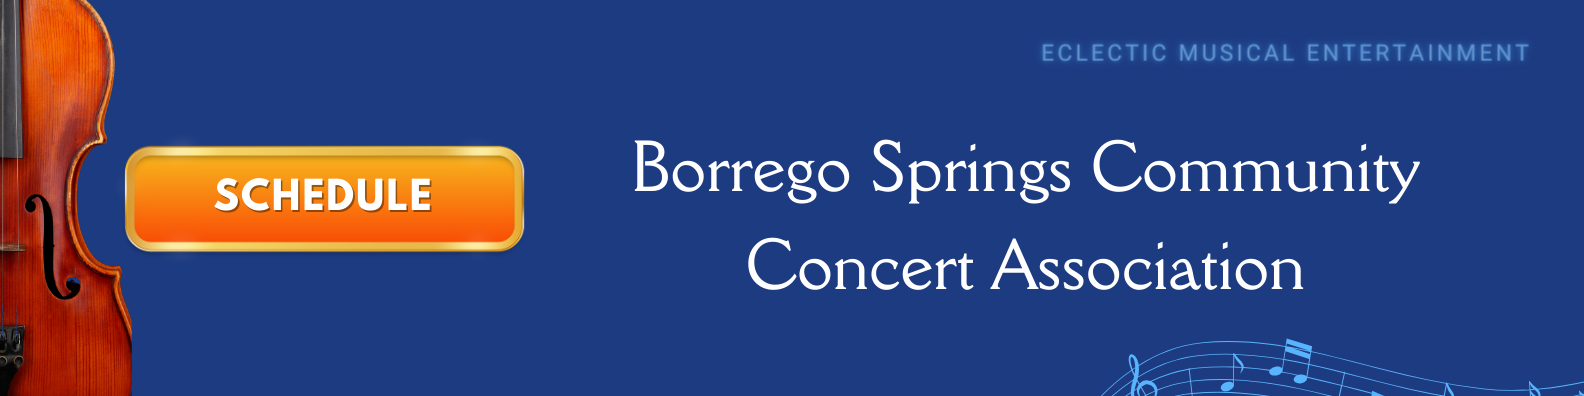 The Borrego Springs Community Concert Association Events